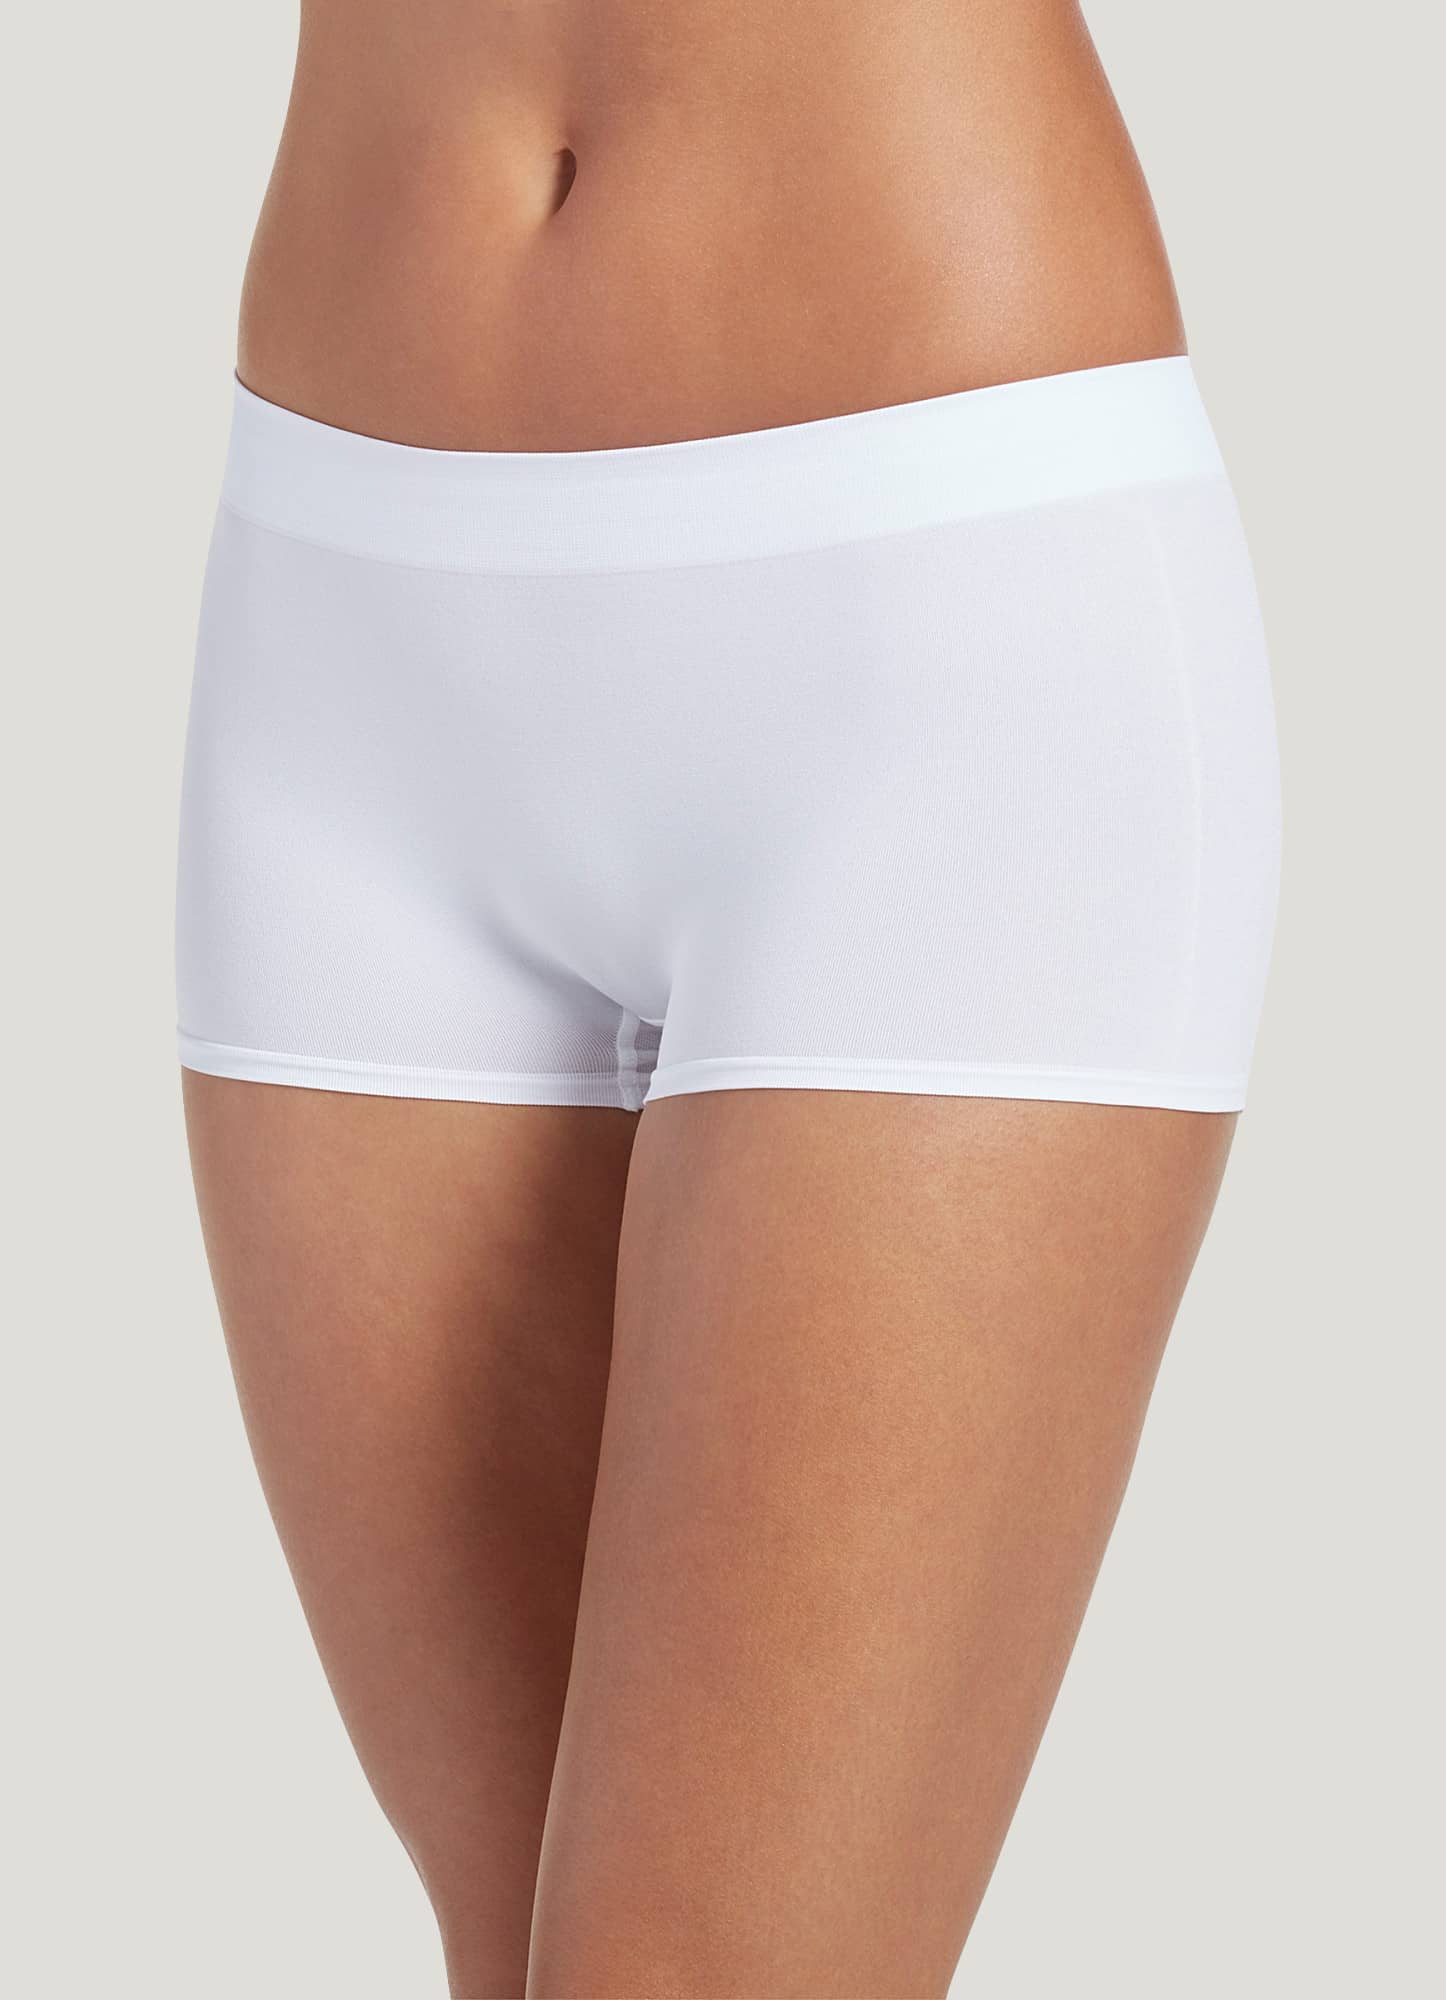 Buy COMFORTABLE CLUB Women's Modal Microfiber Boyshorts Panties